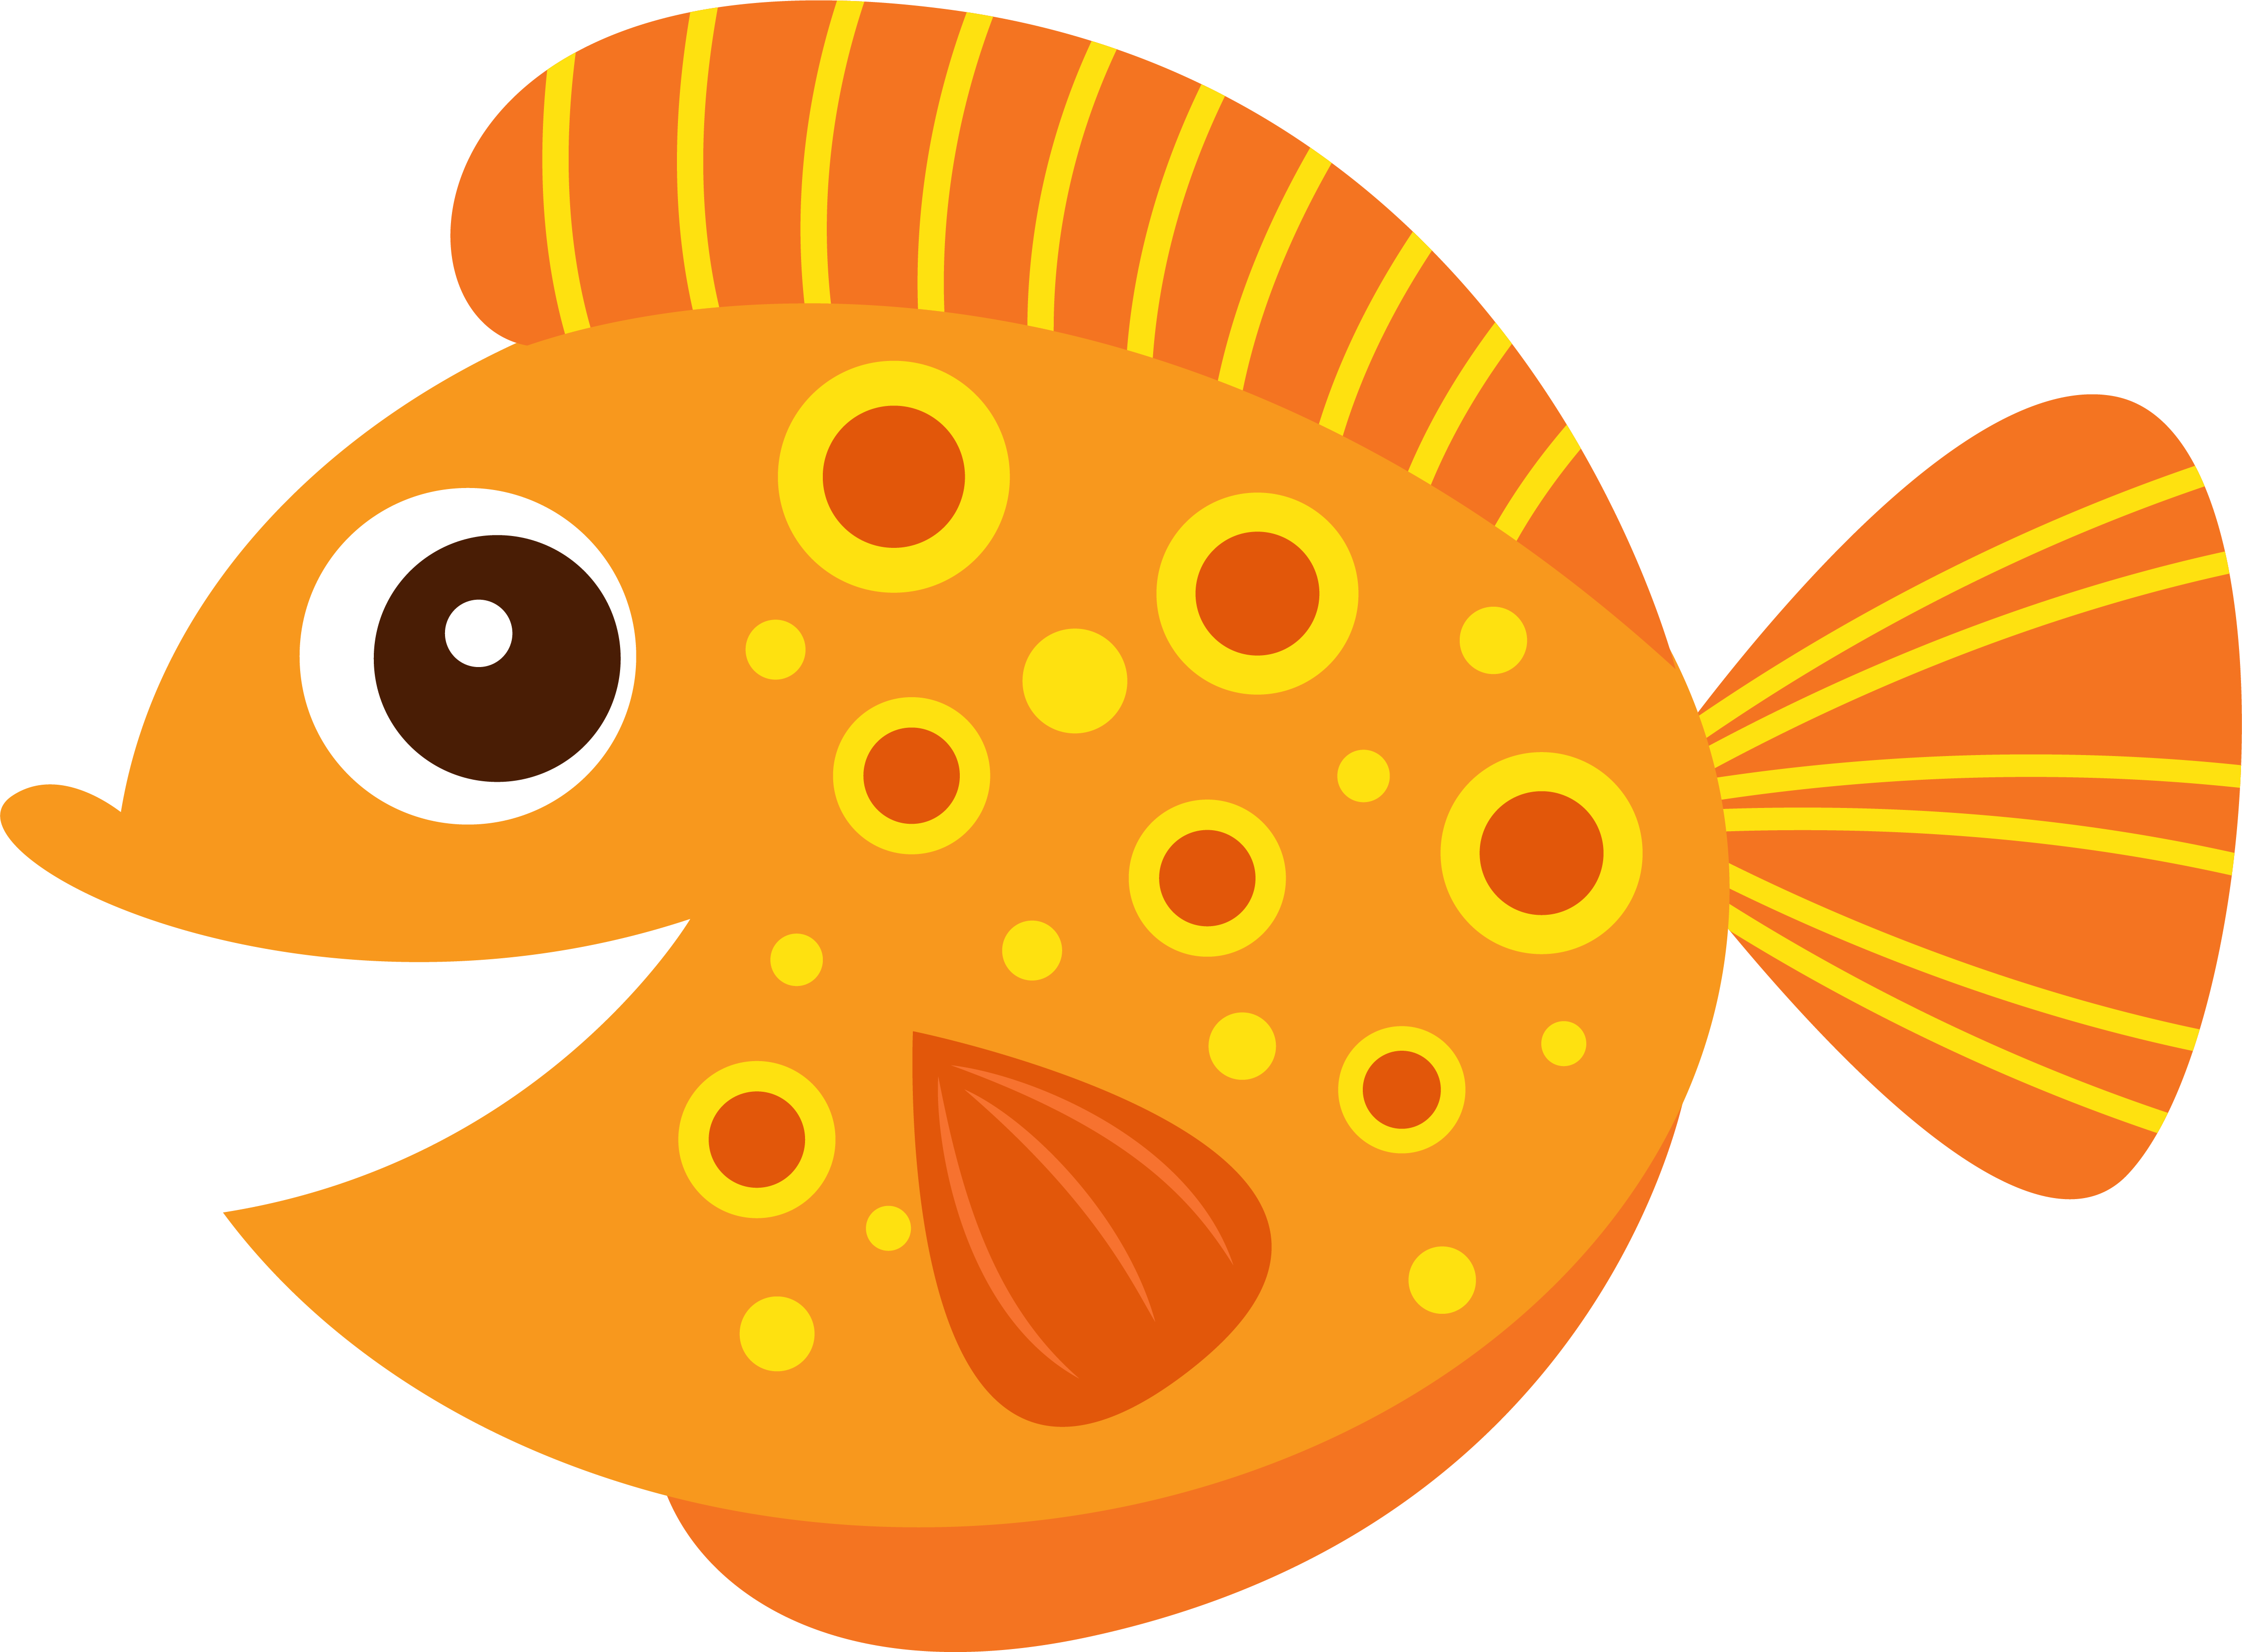 Fish PNG Image in Transparent - Fish Png